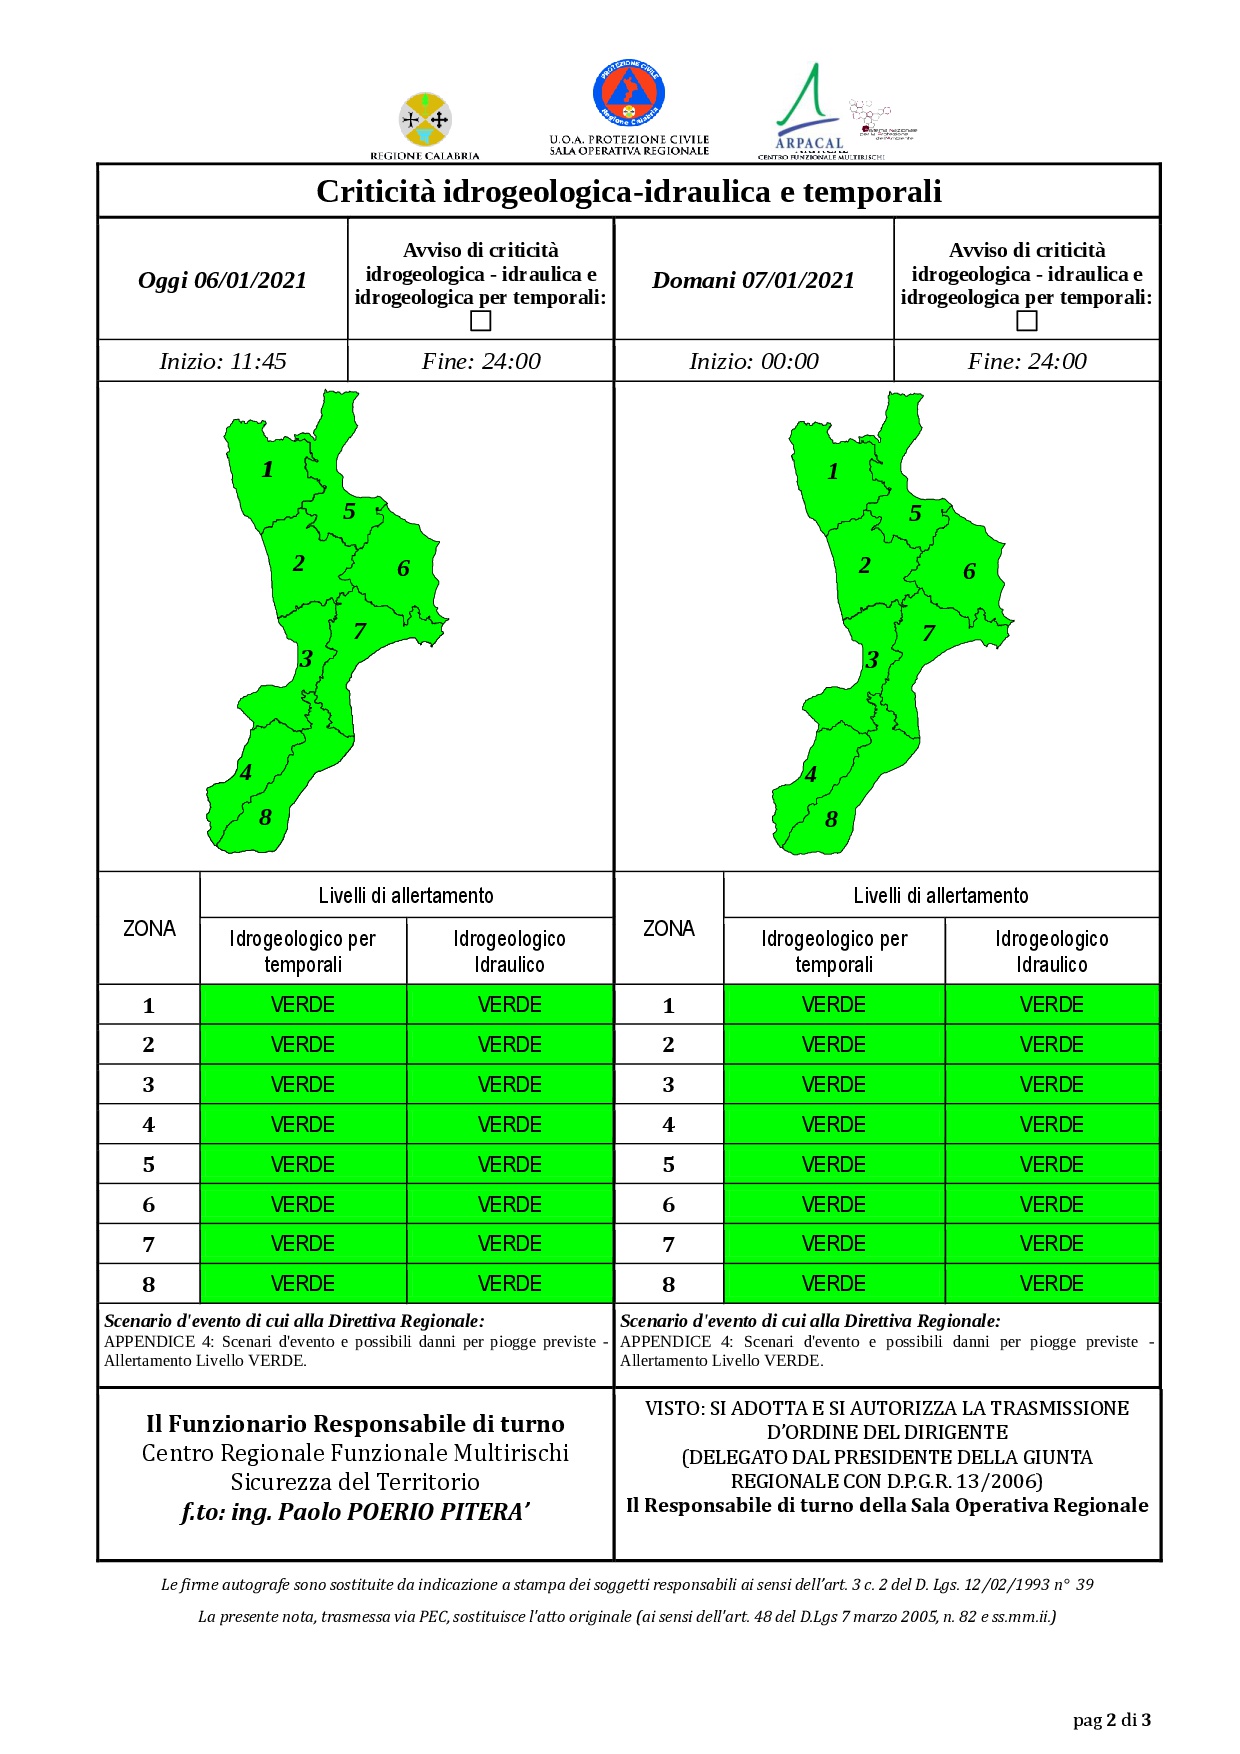 Criticità idrogeologica-idraulica e temporali in Calabria 06-01-2021